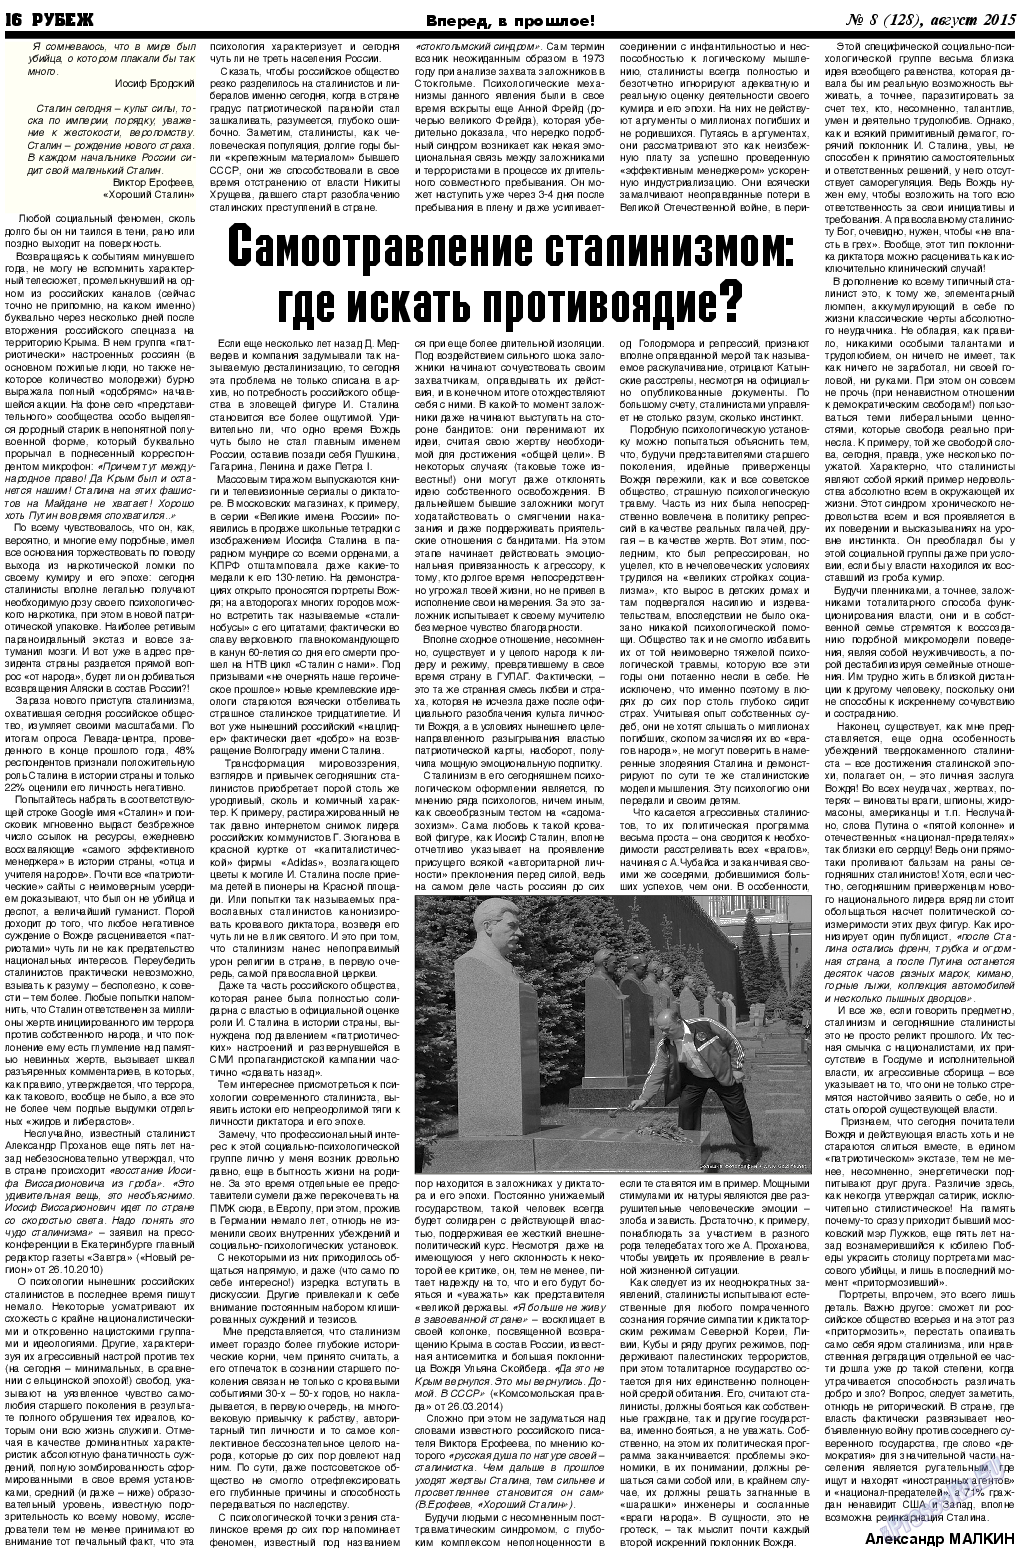 Рубеж, газета. 2015 №8 стр.16